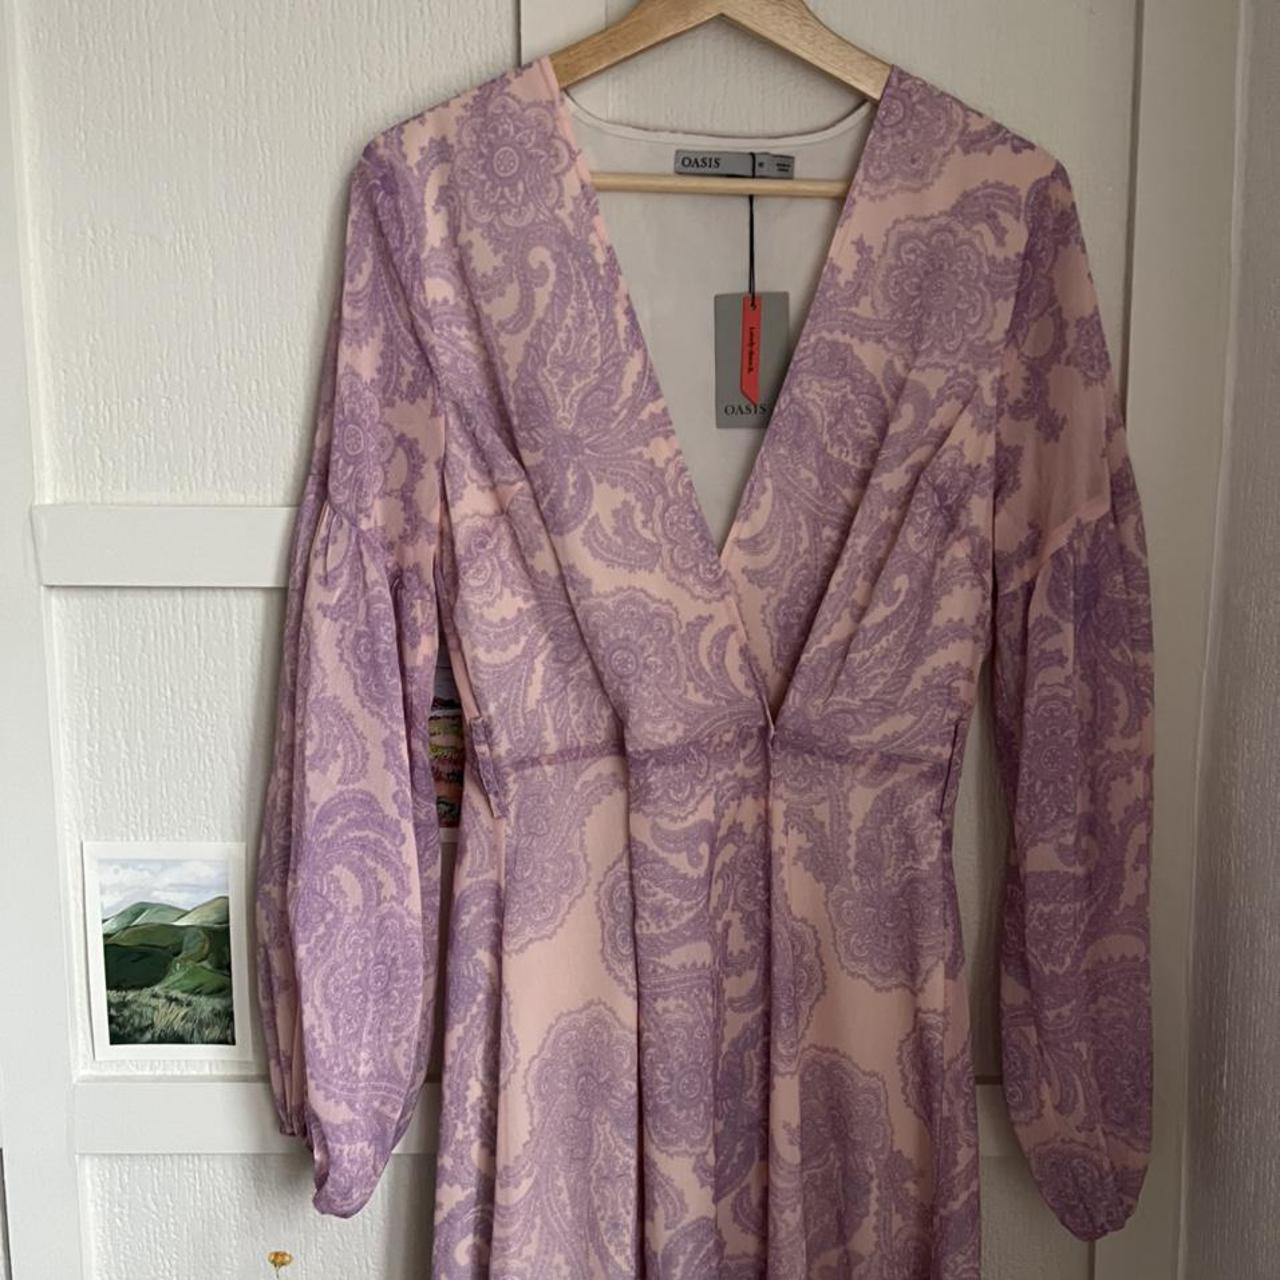 Oasis midi wrap dress in paisley pattern. Such a... - Depop